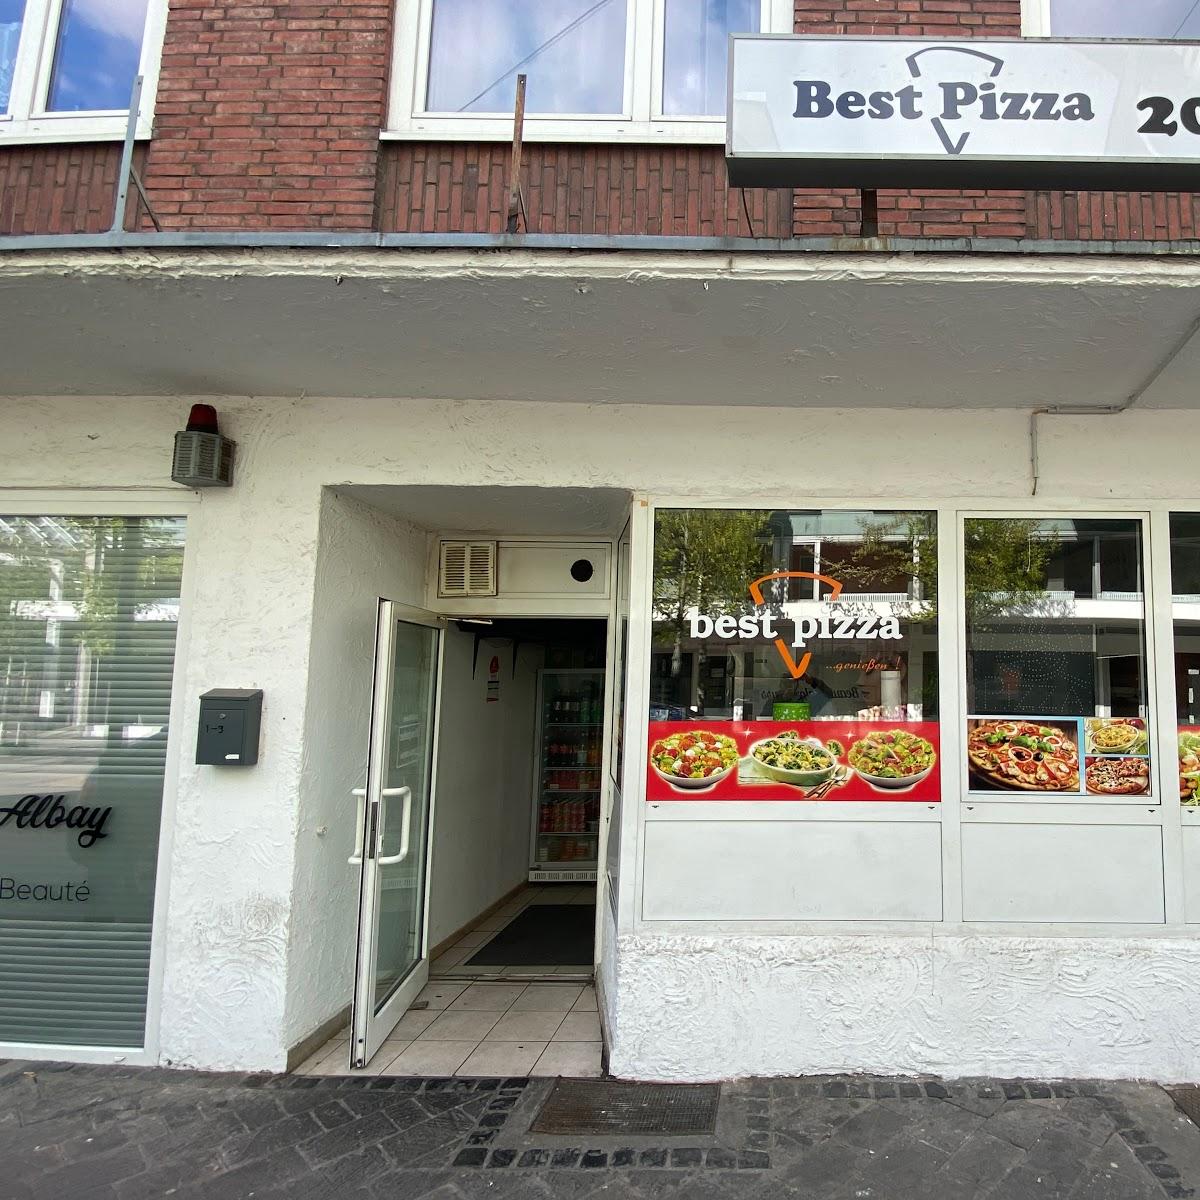 Restaurant "Best Pizza Neuss" in Neuss